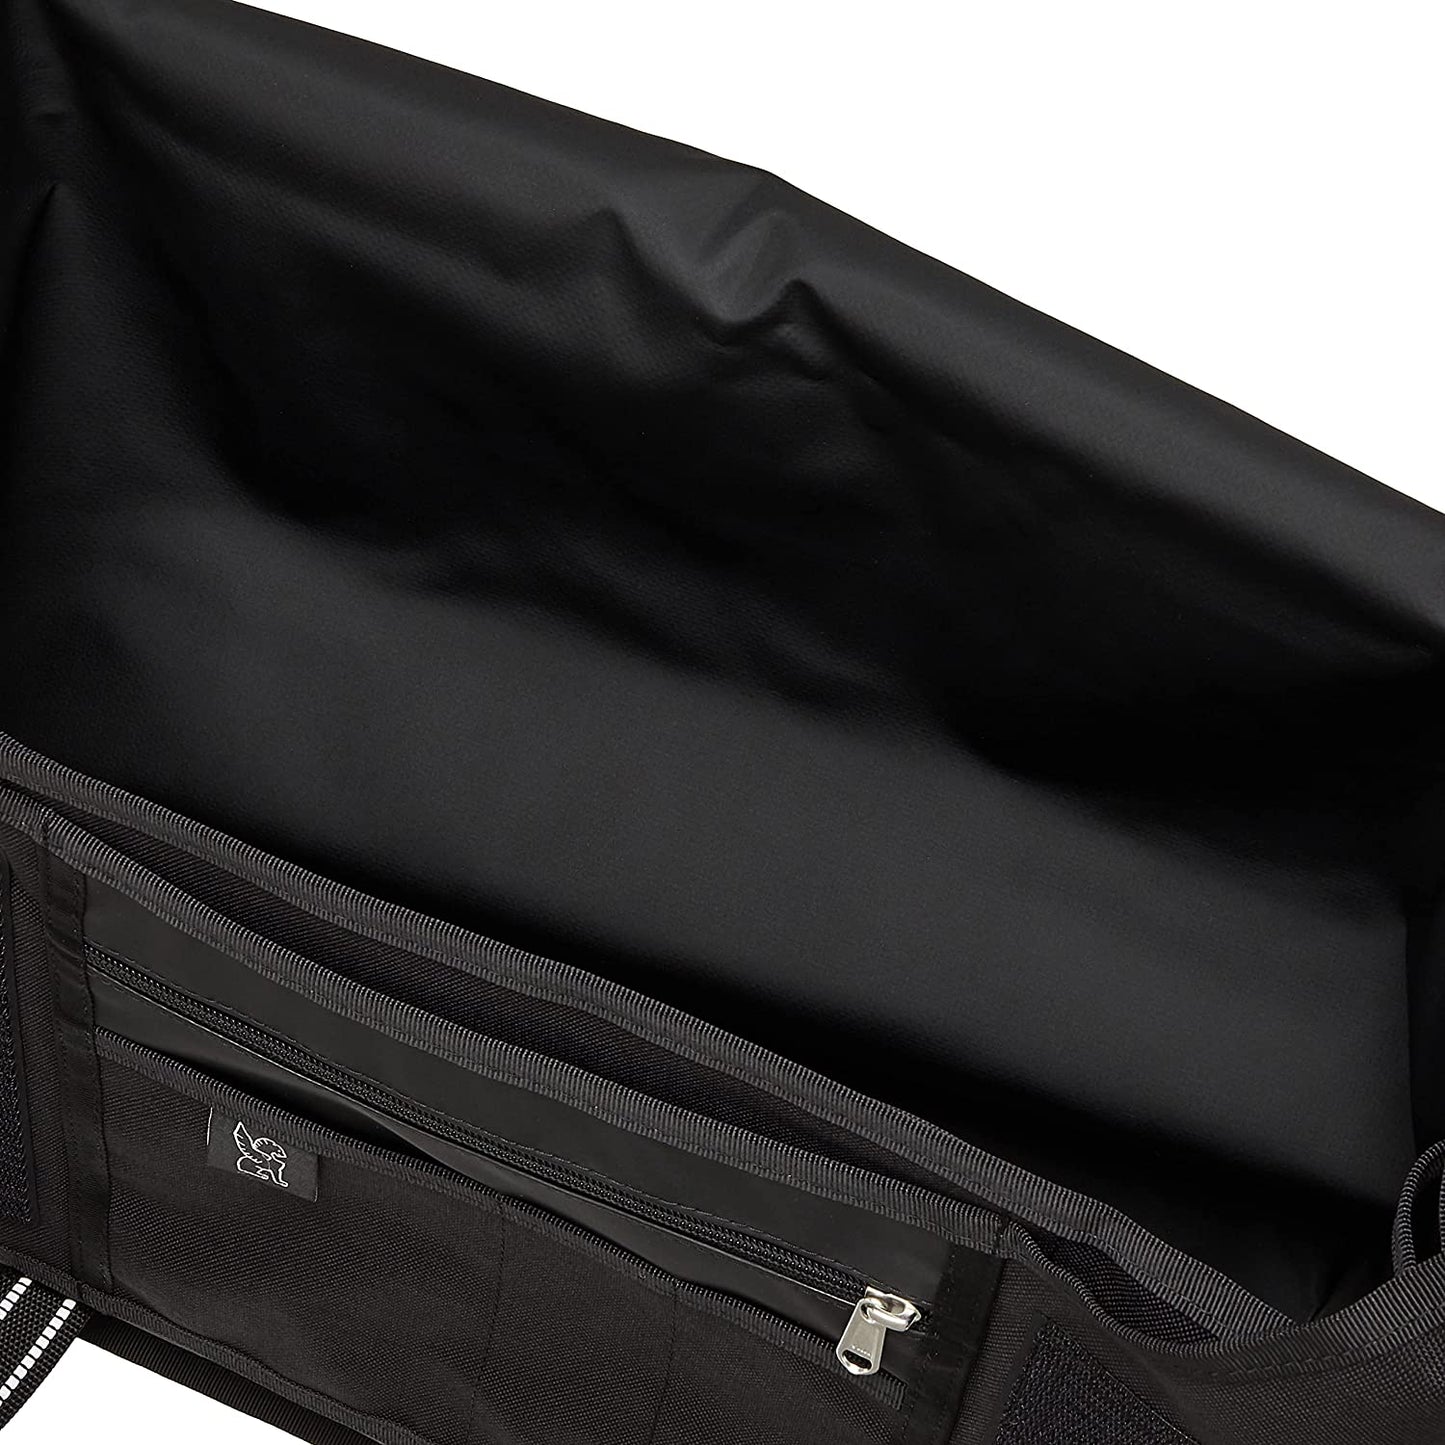 Chrome Industries Citizen Messenger Bag - 17 Inch Laptop Satchel with Signature Belt Buckle Closure, 24 Liter